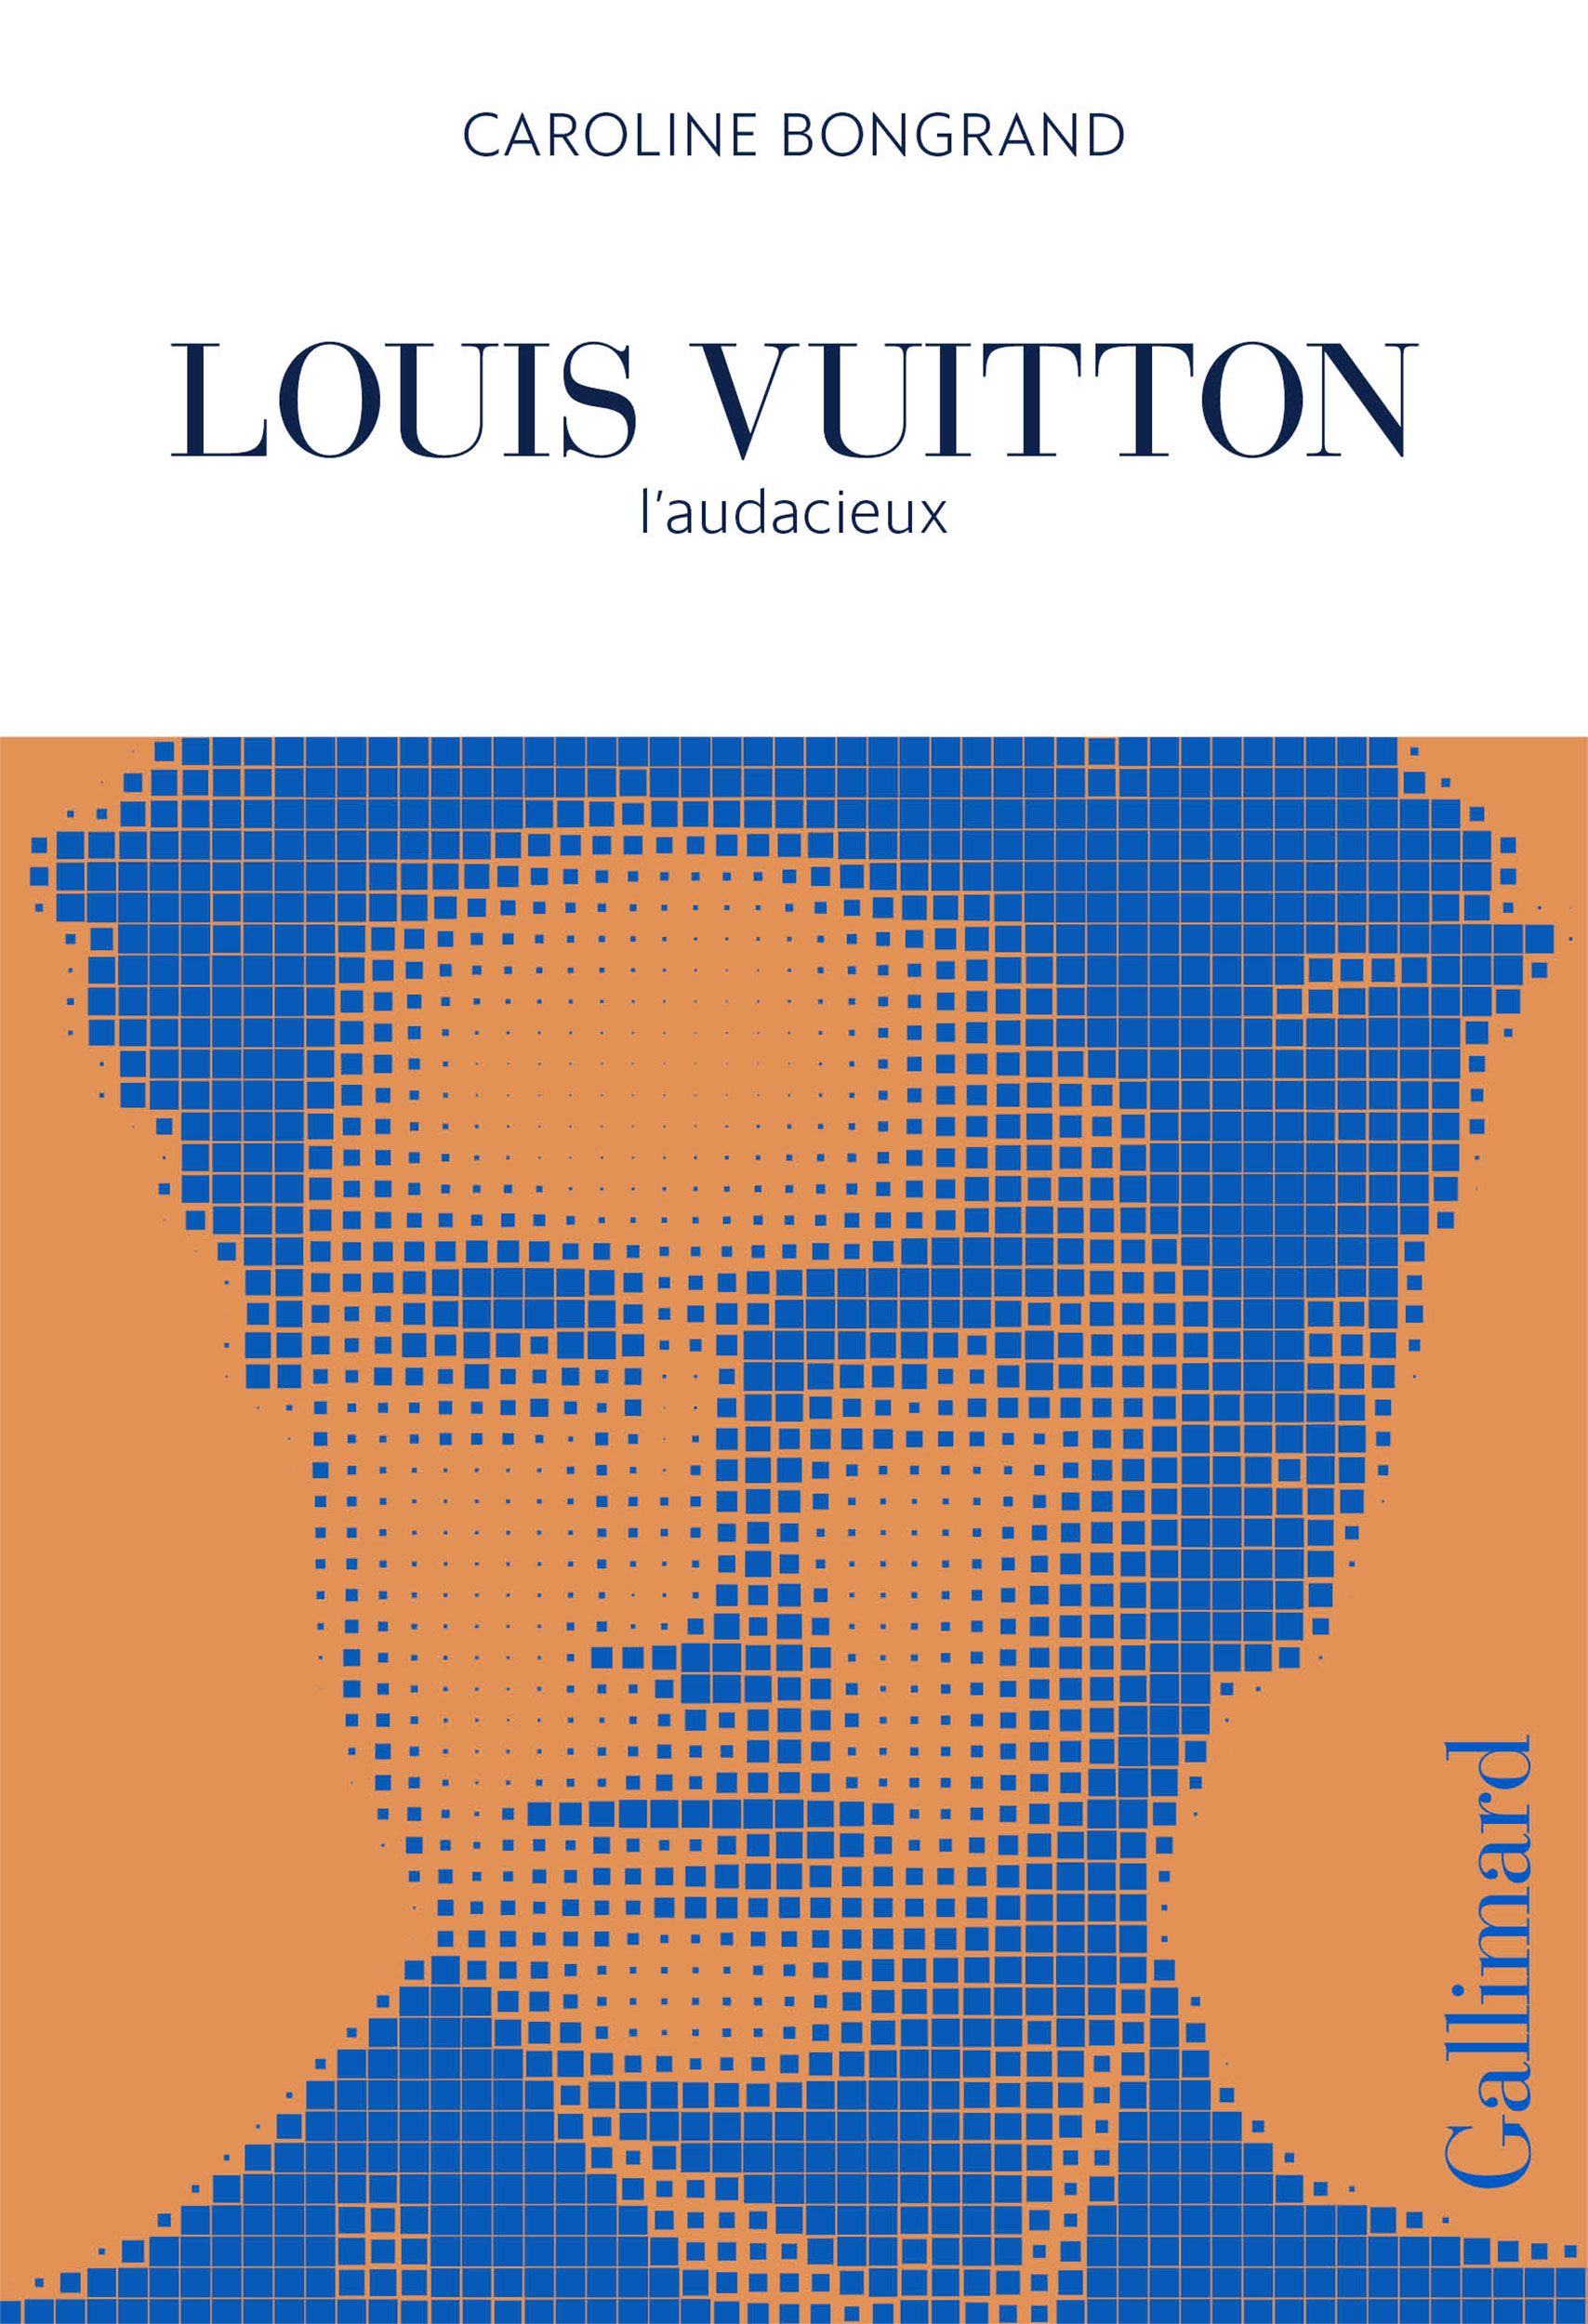 Louis Vuitton Kicks Off 200th Anniversary with a Brilliant